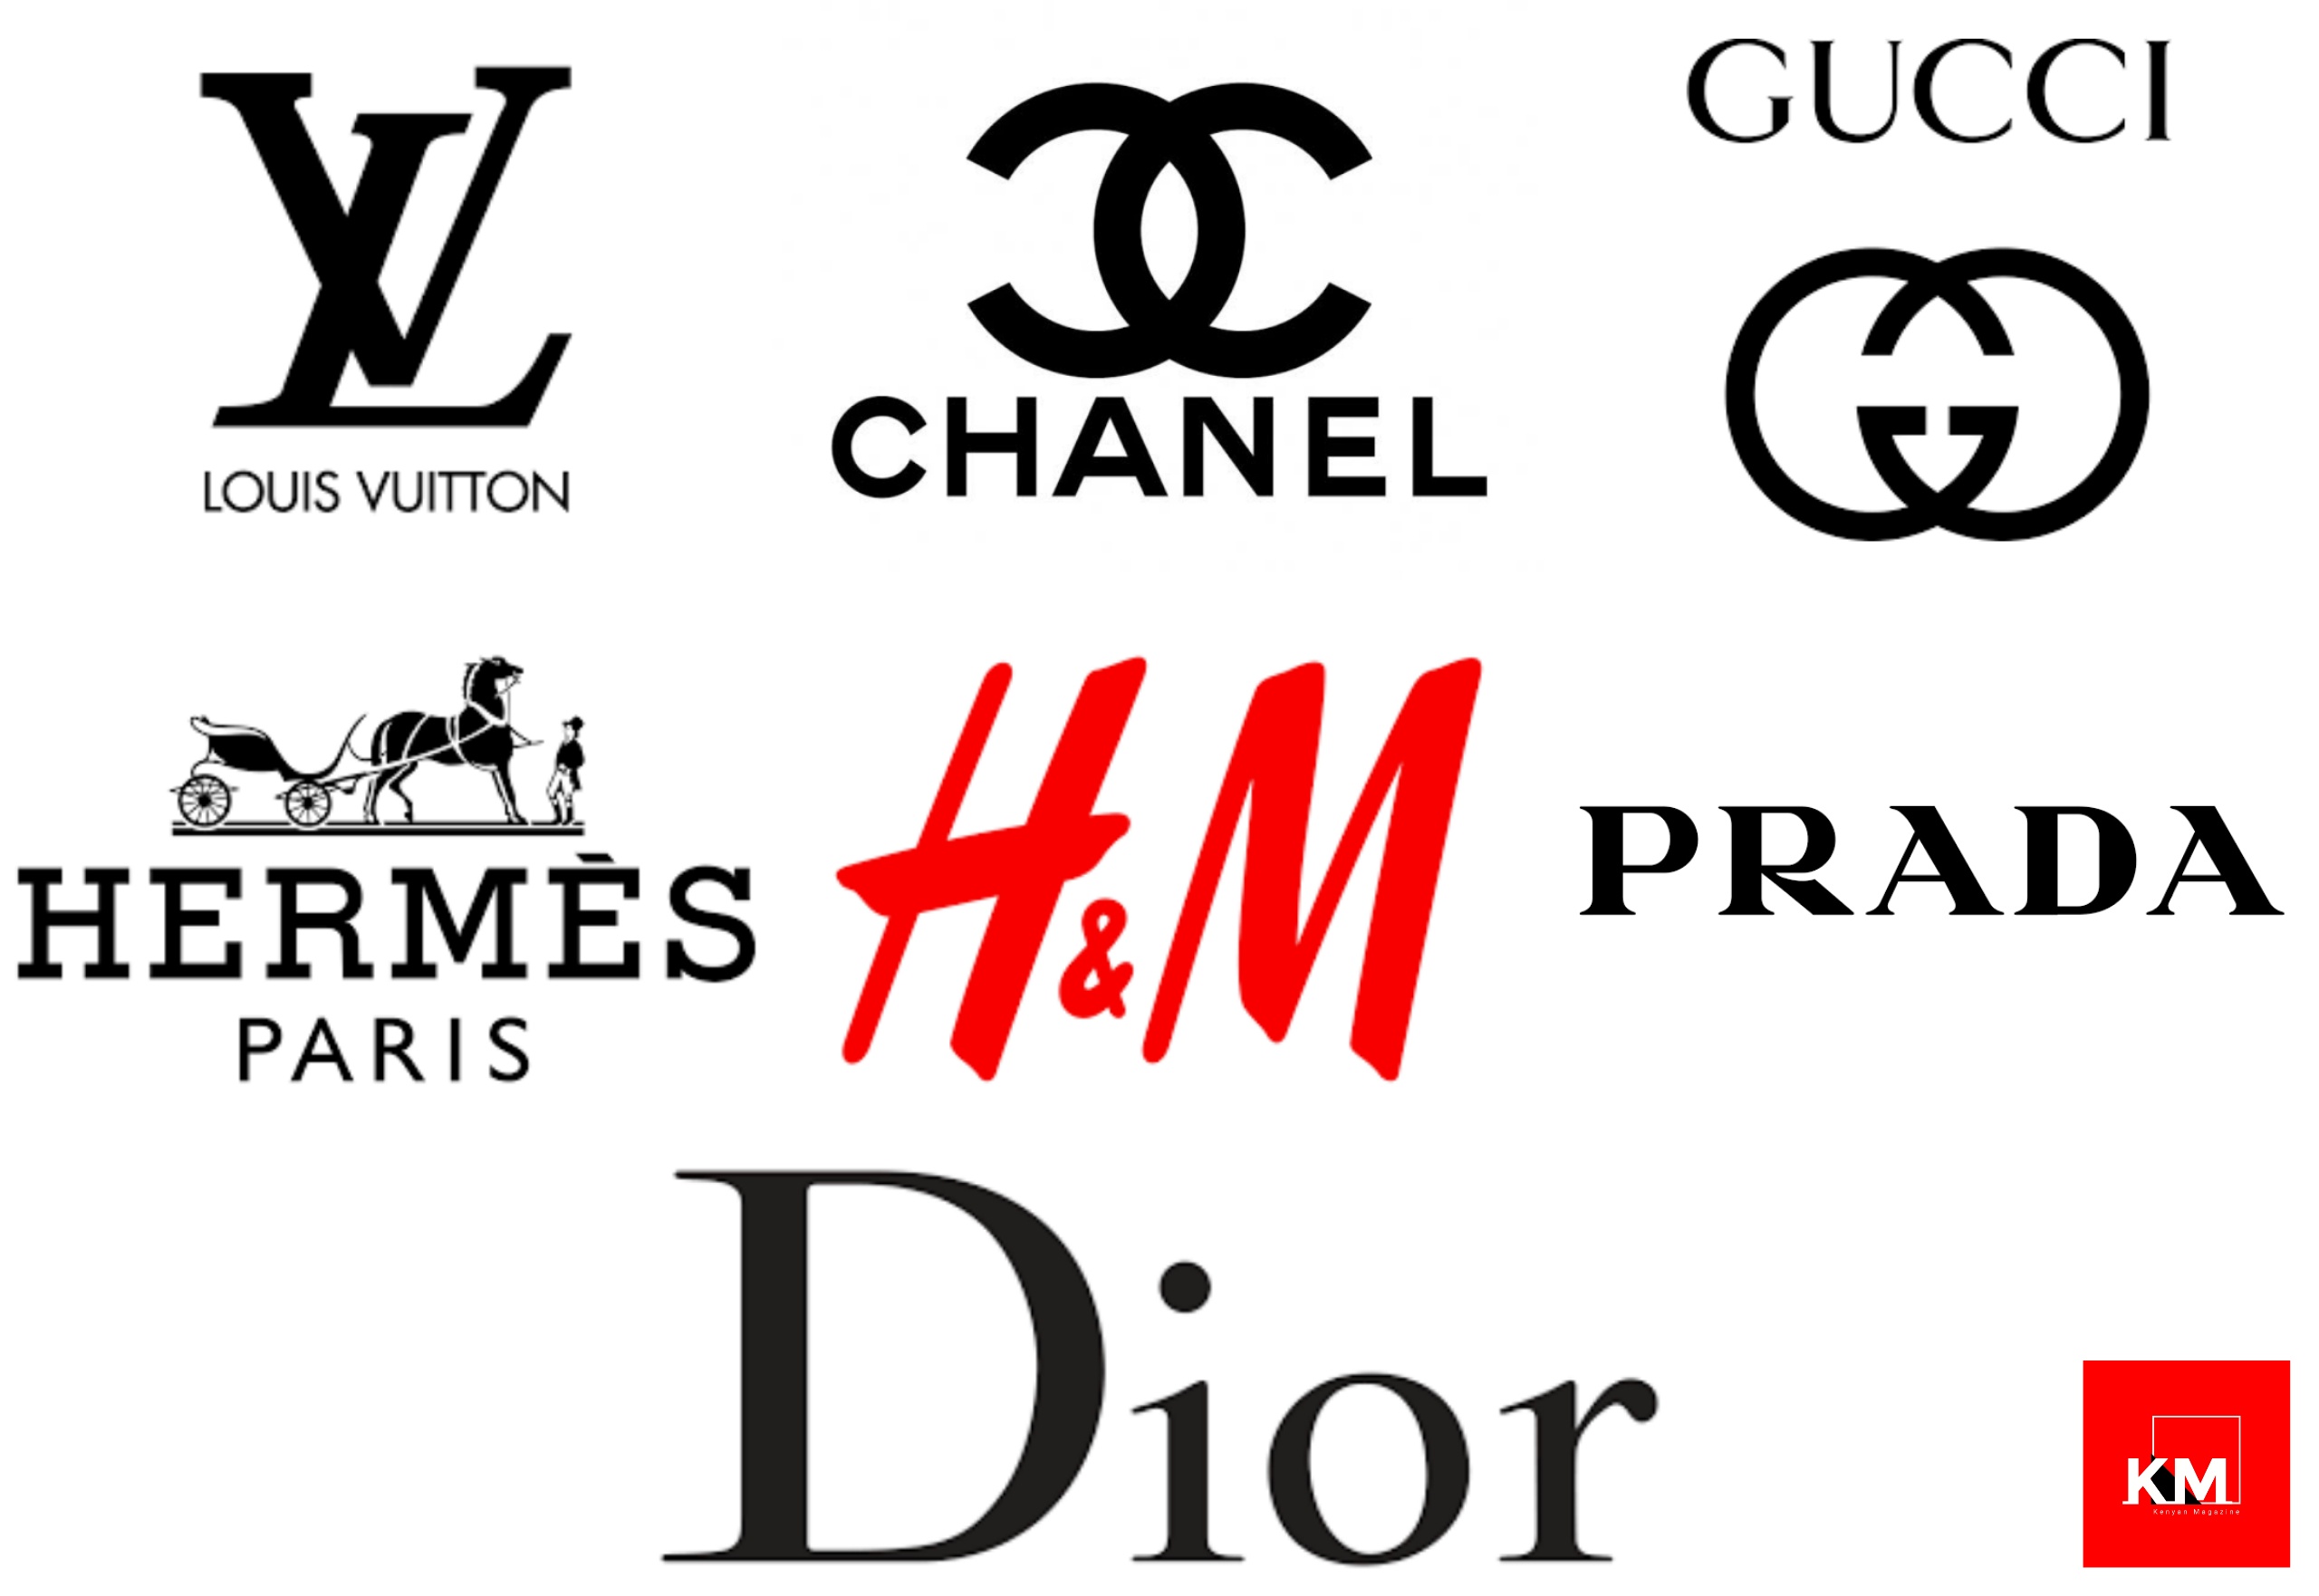 Most Popular Fashion Brands - Best Design Idea